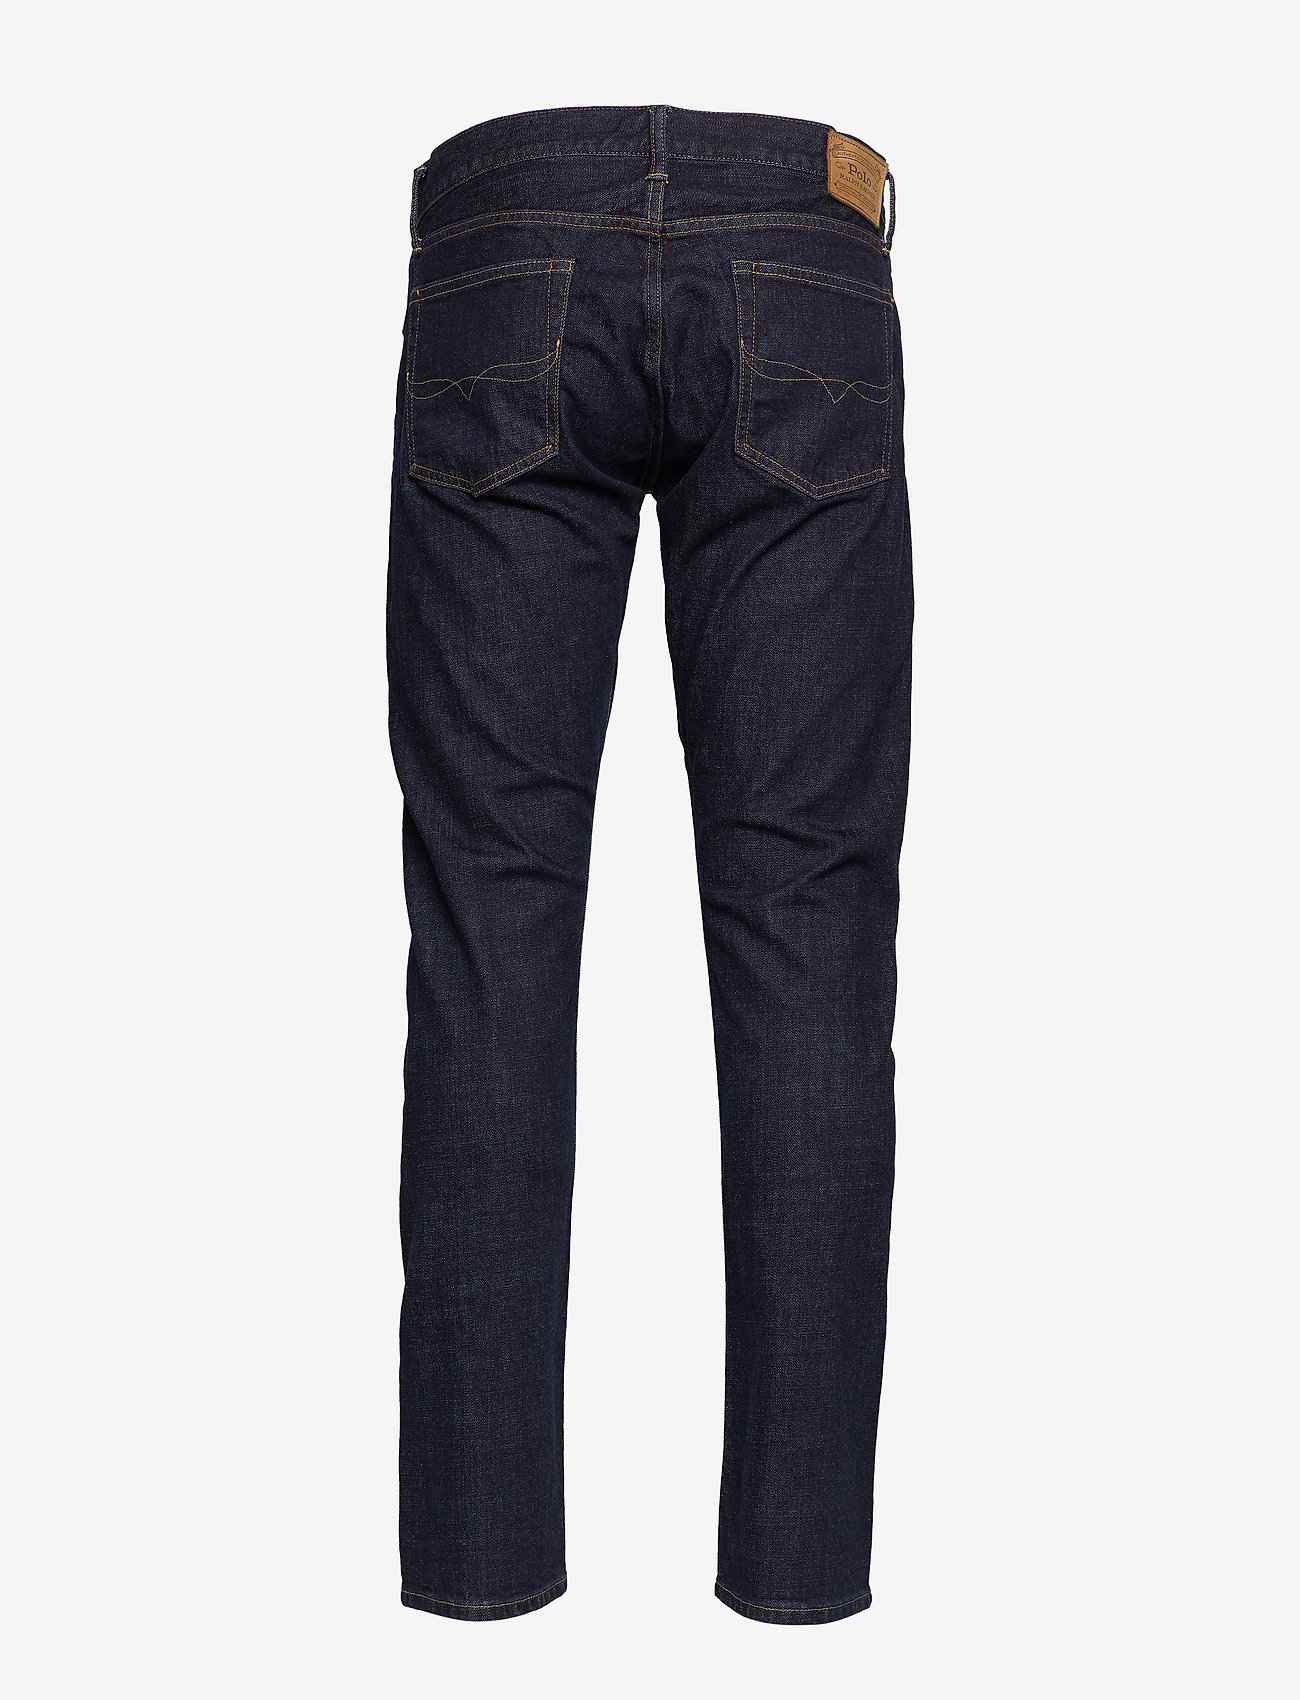 pijp zadel snap Polo Ralph Lauren Sullivan Slim Jean With Polo - Slim jeans - Boozt.com